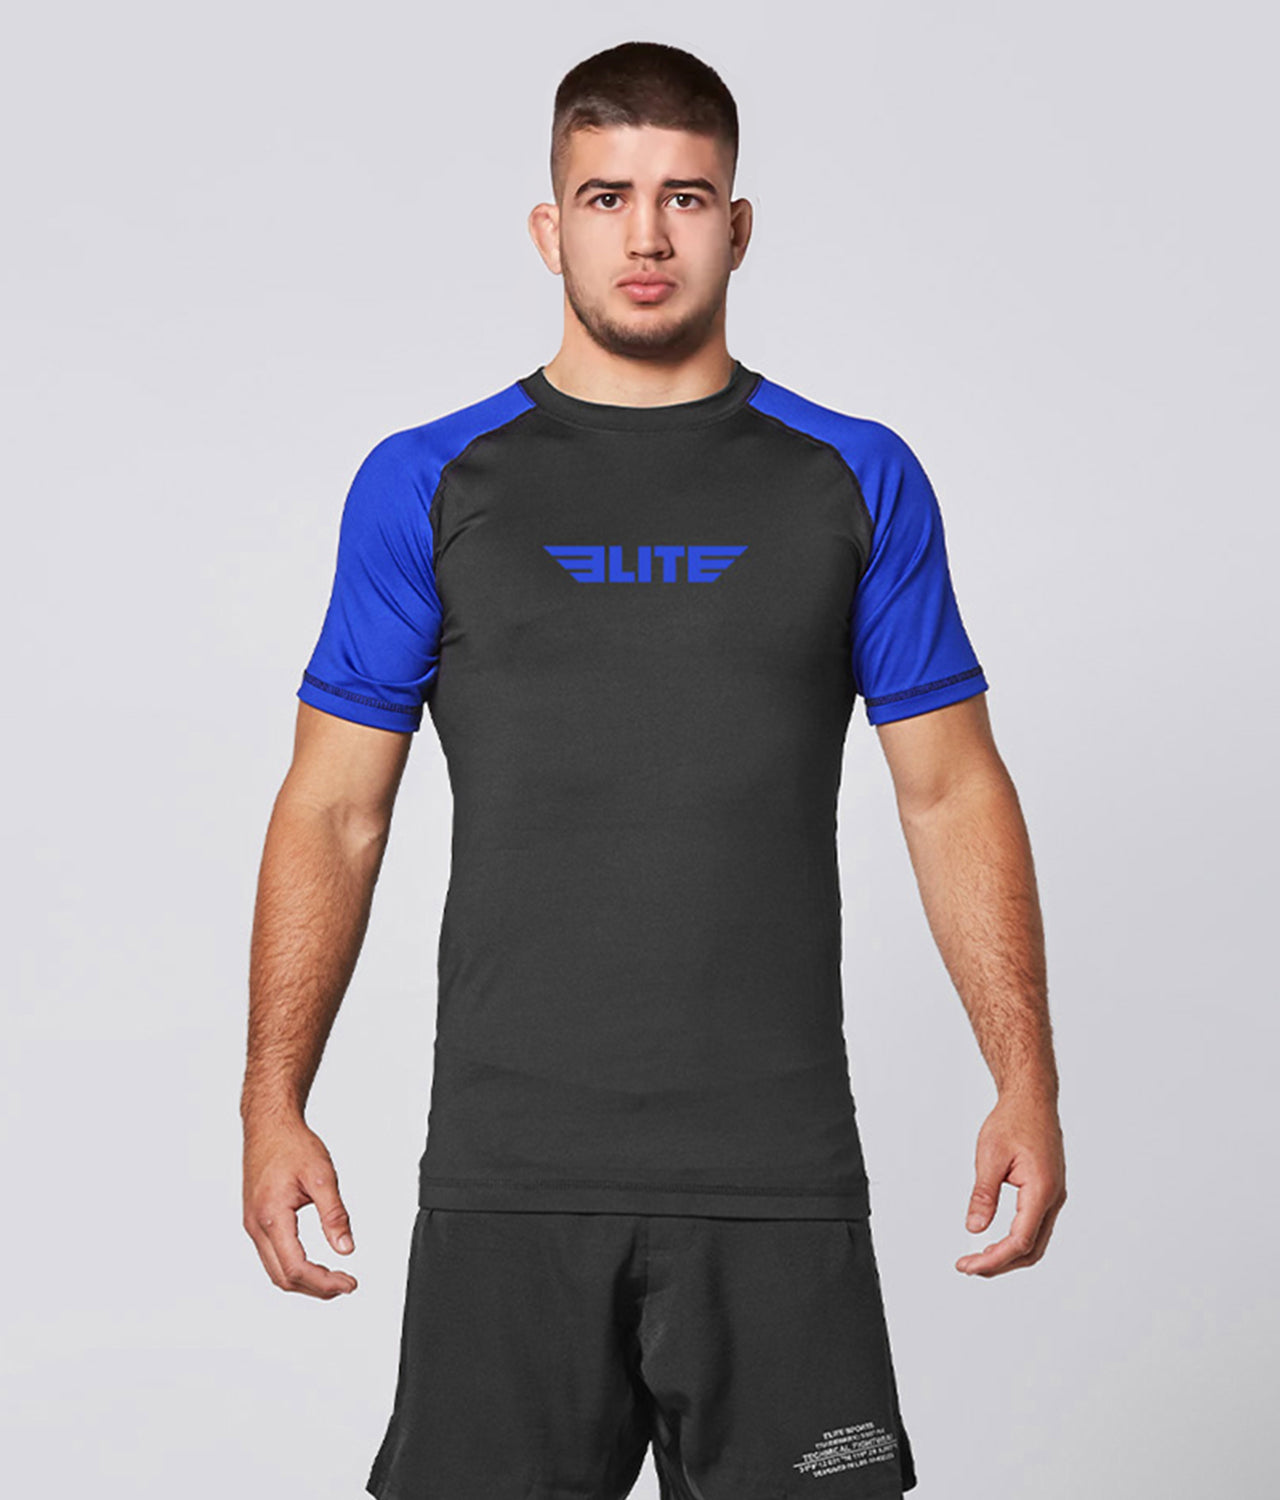 Men's Standard Blue Short Sleeve MMA Rash Guard